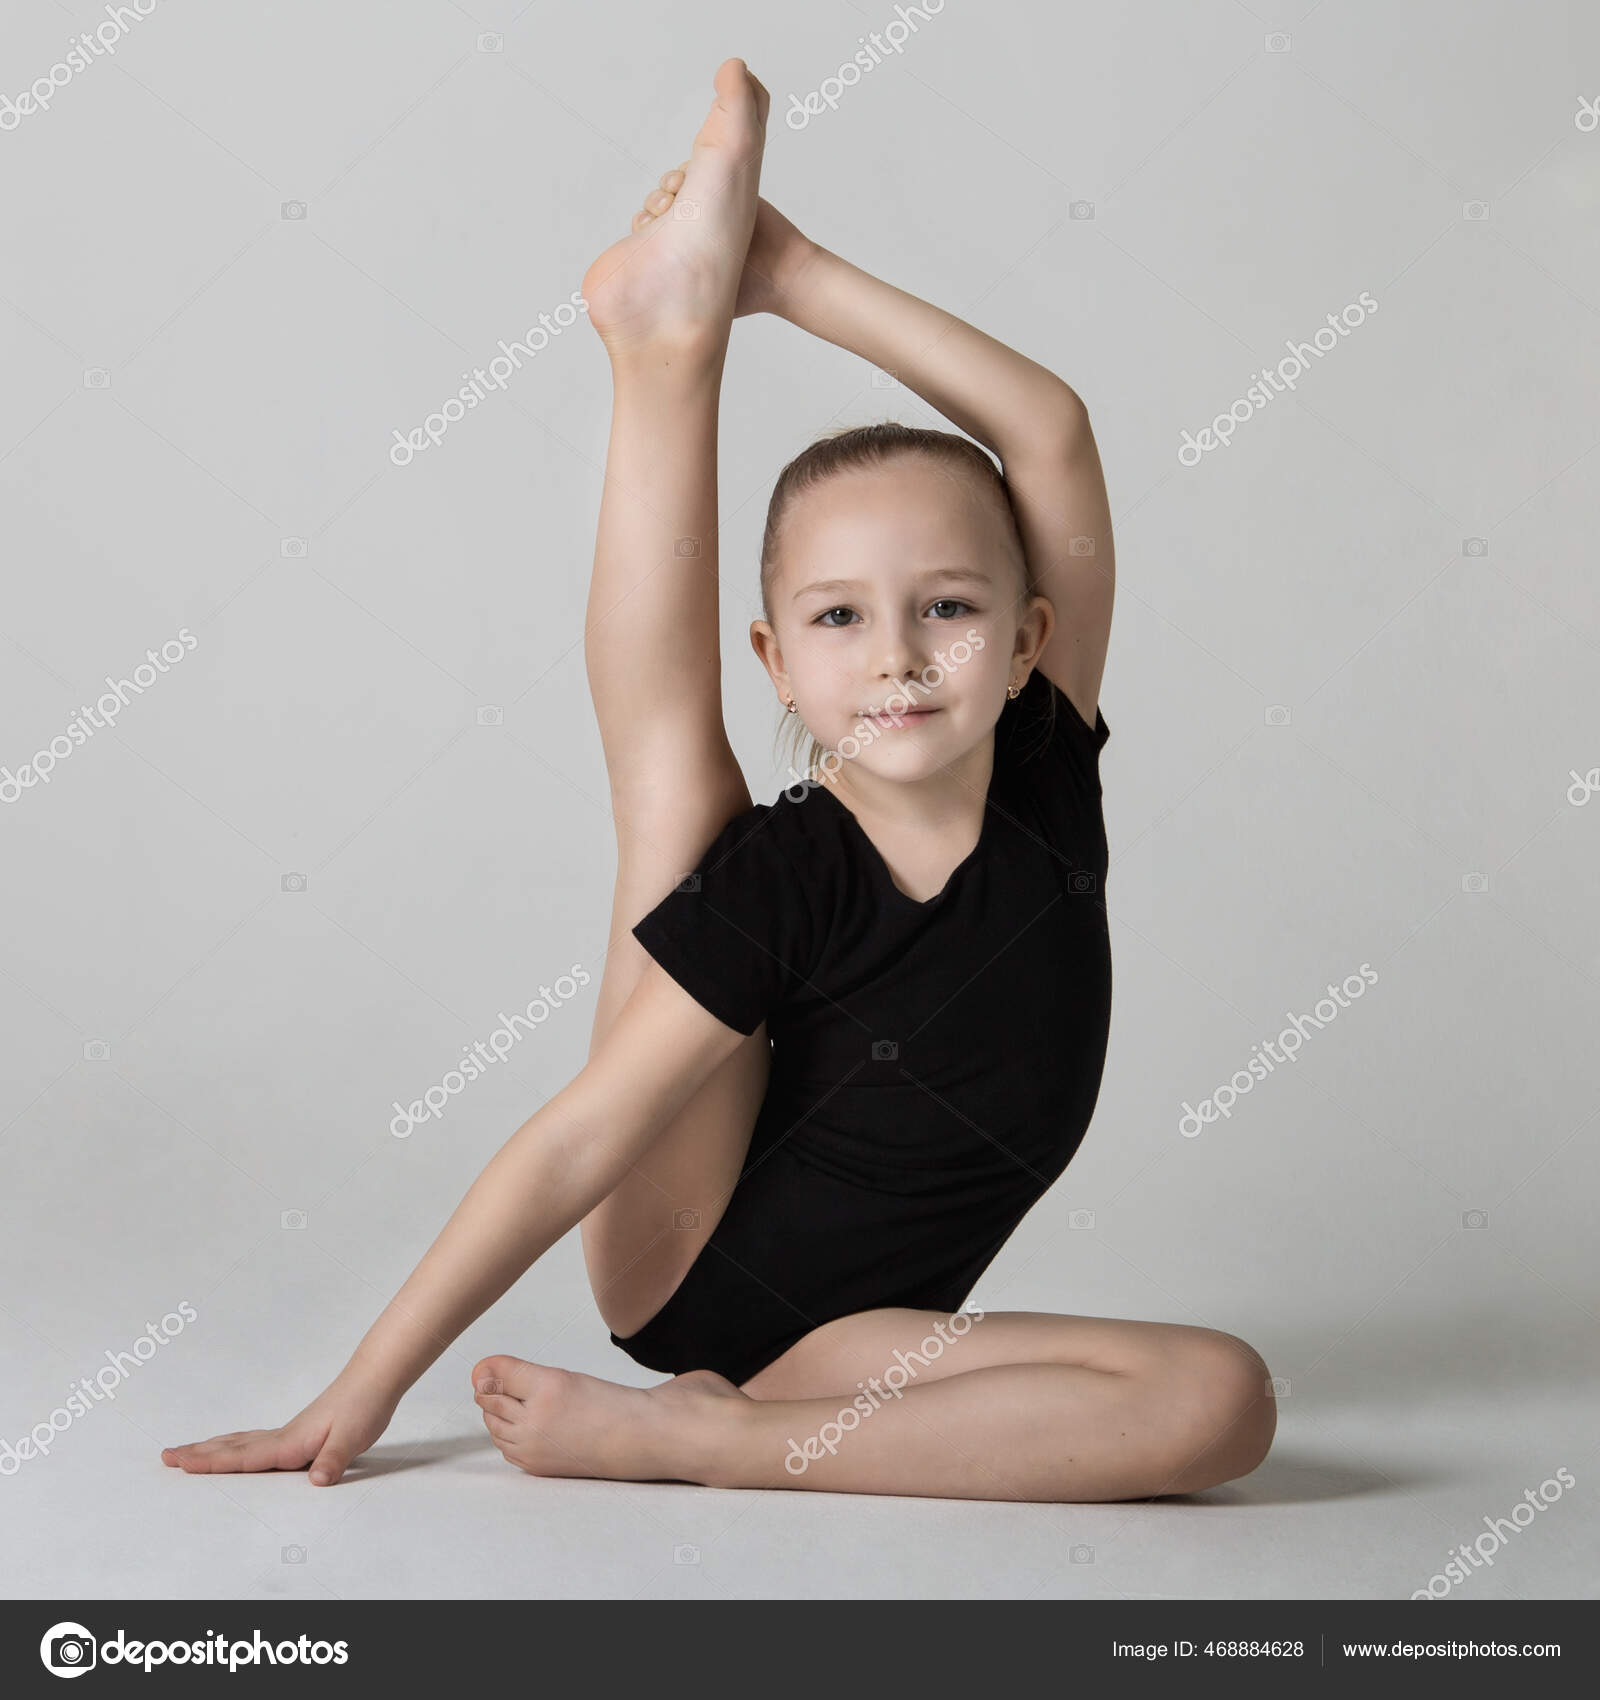 11 Beginner Gymnastics Skills to Learn First